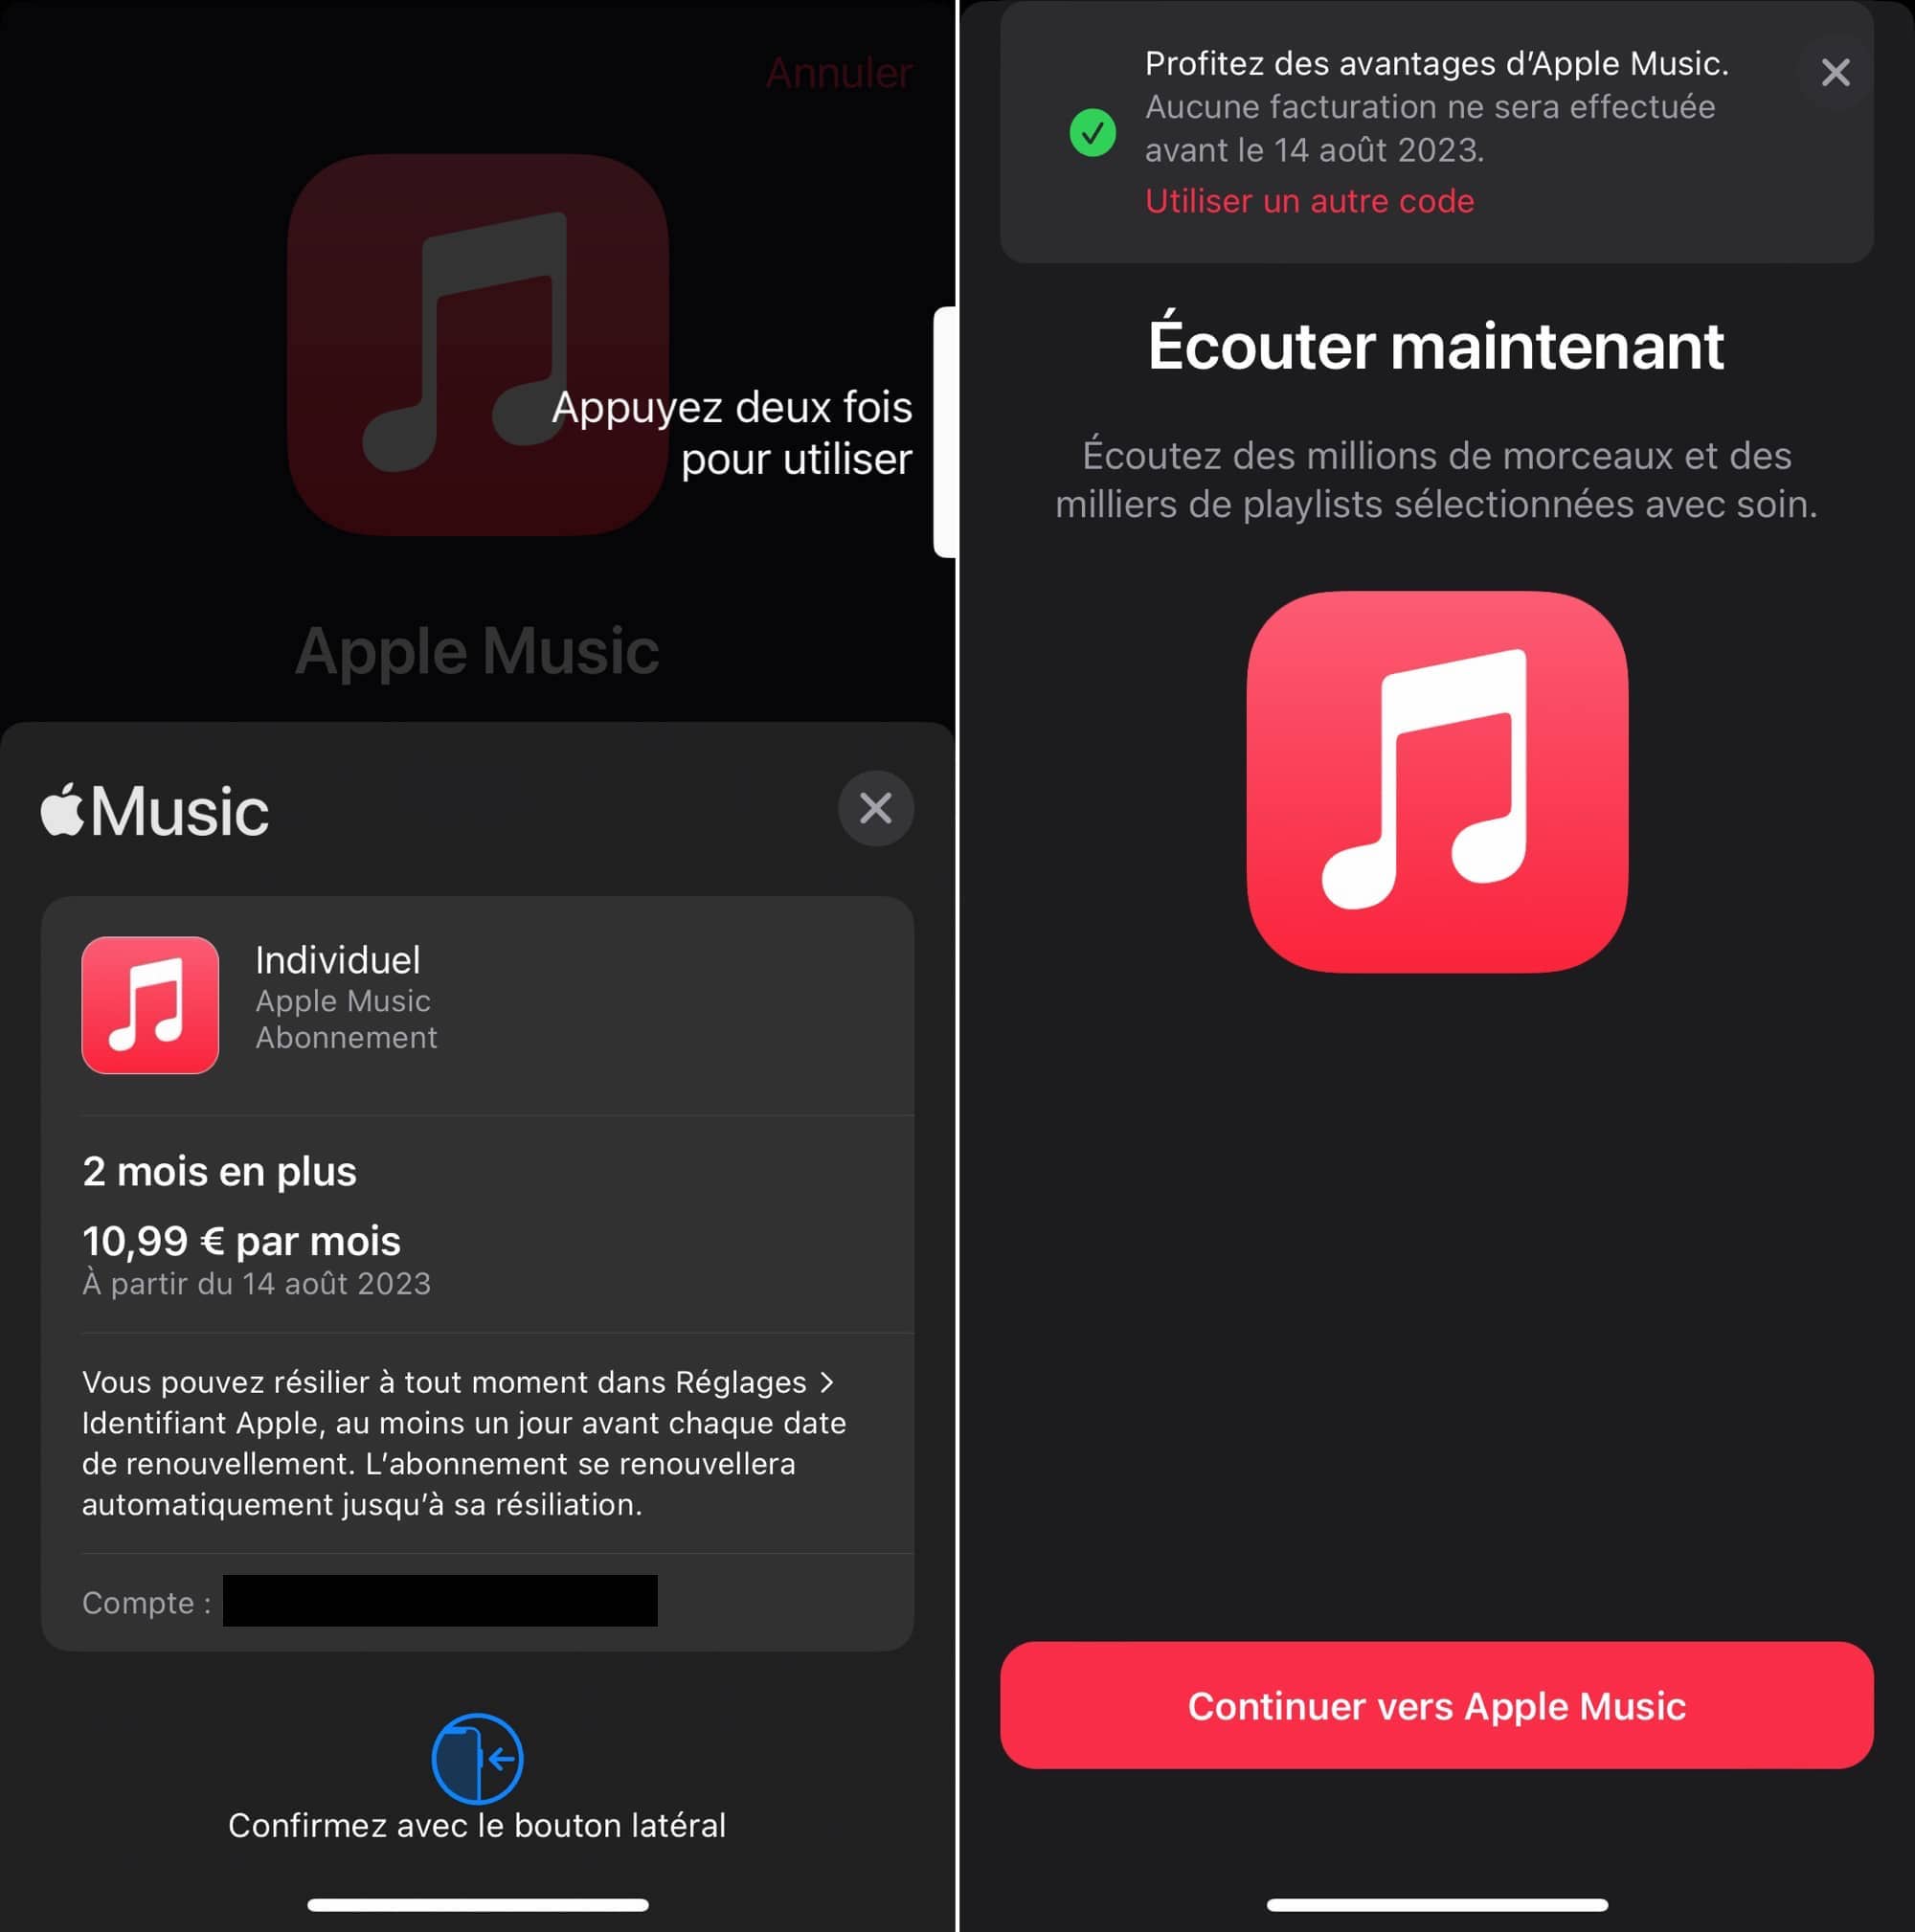 Abonnement Apple Music 2 mois offerts